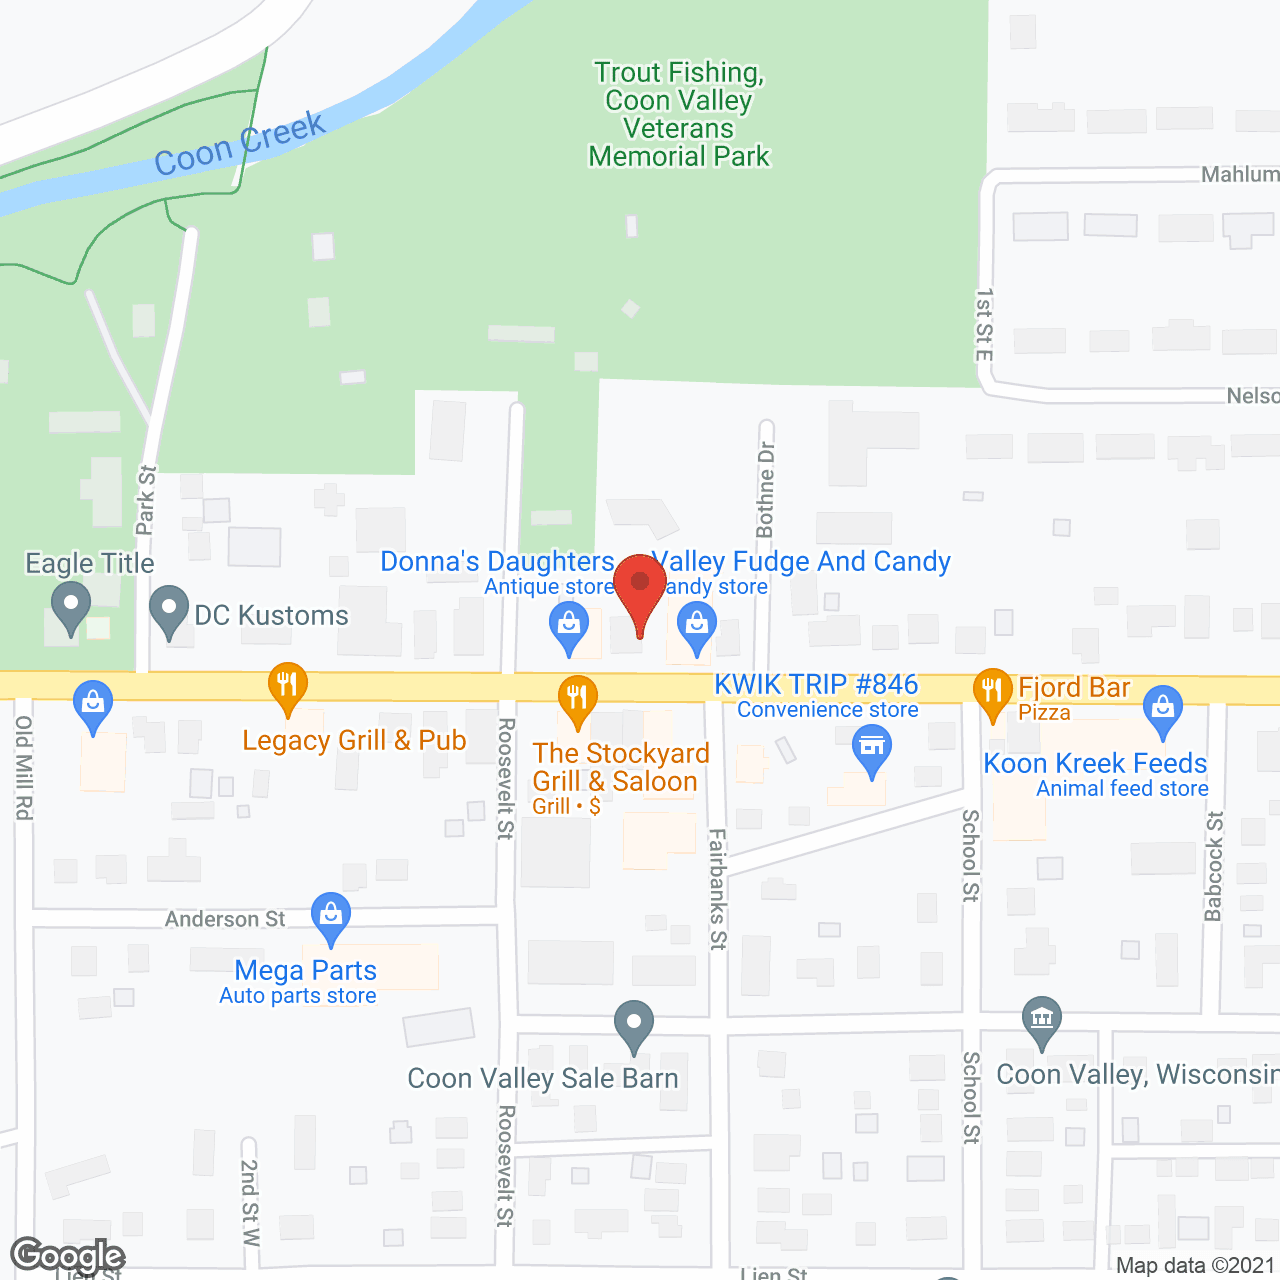 Bothne House in google map